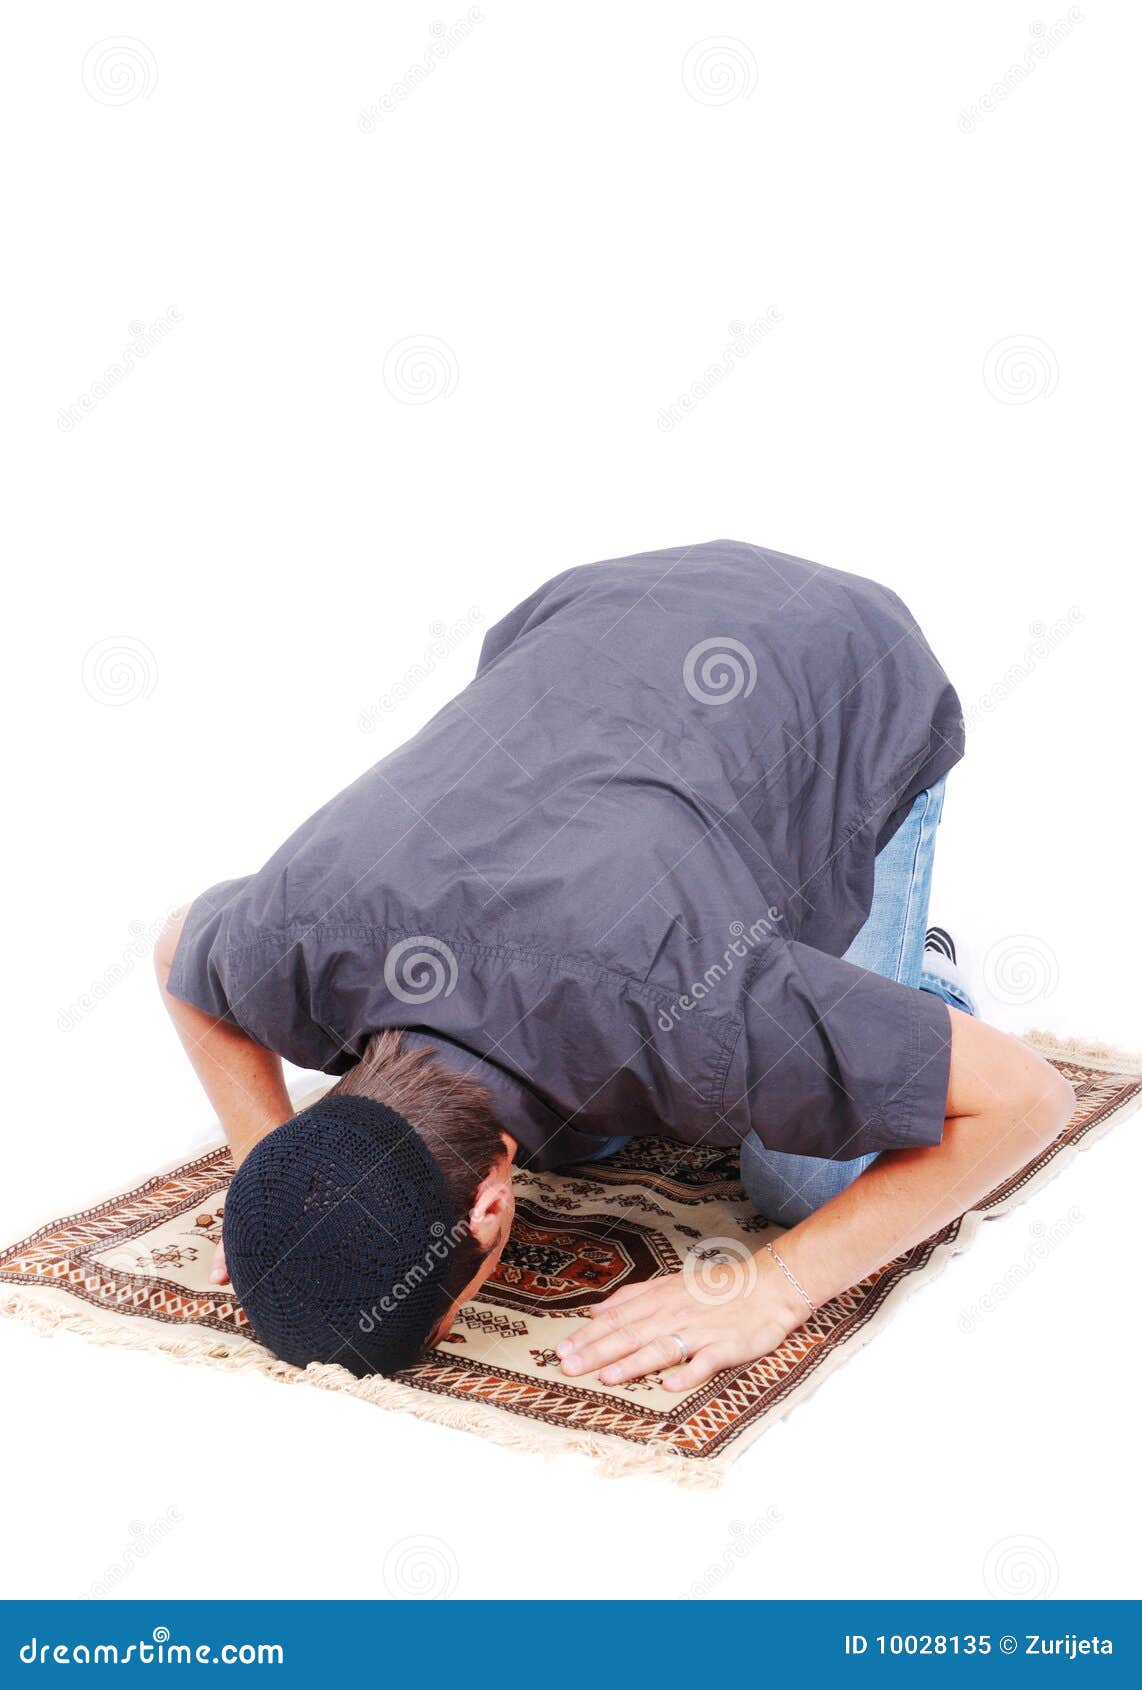 Muslim Man is Praying on Traditional Way Stock Image - Image of love,  communication: 10028135